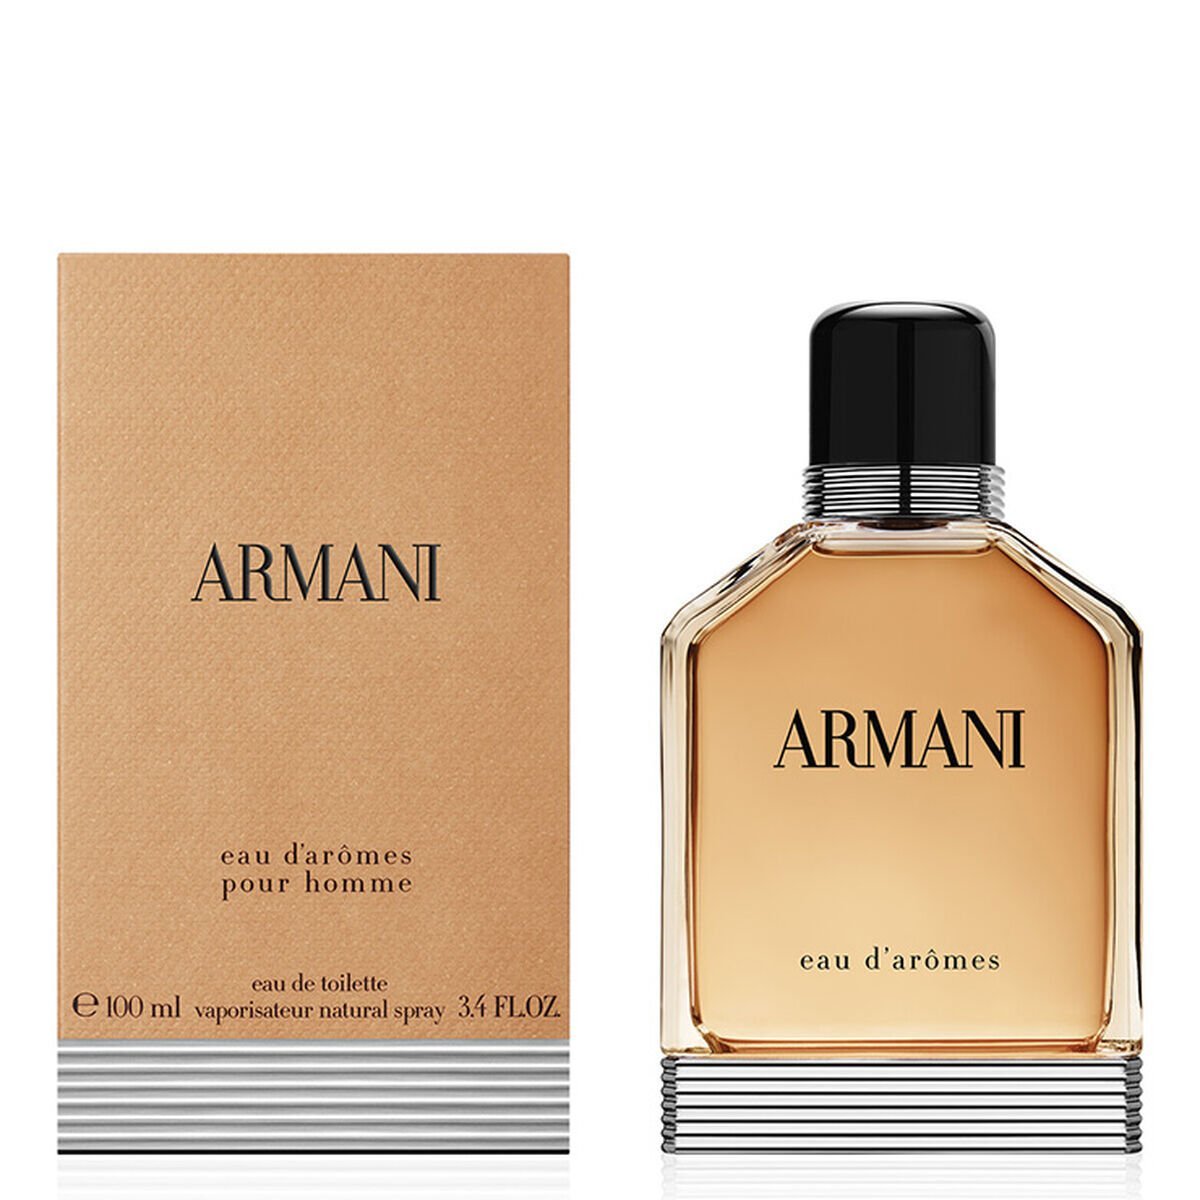 Giorgio Armani Eau D'Aromes EDT | My Perfume Shop Australia